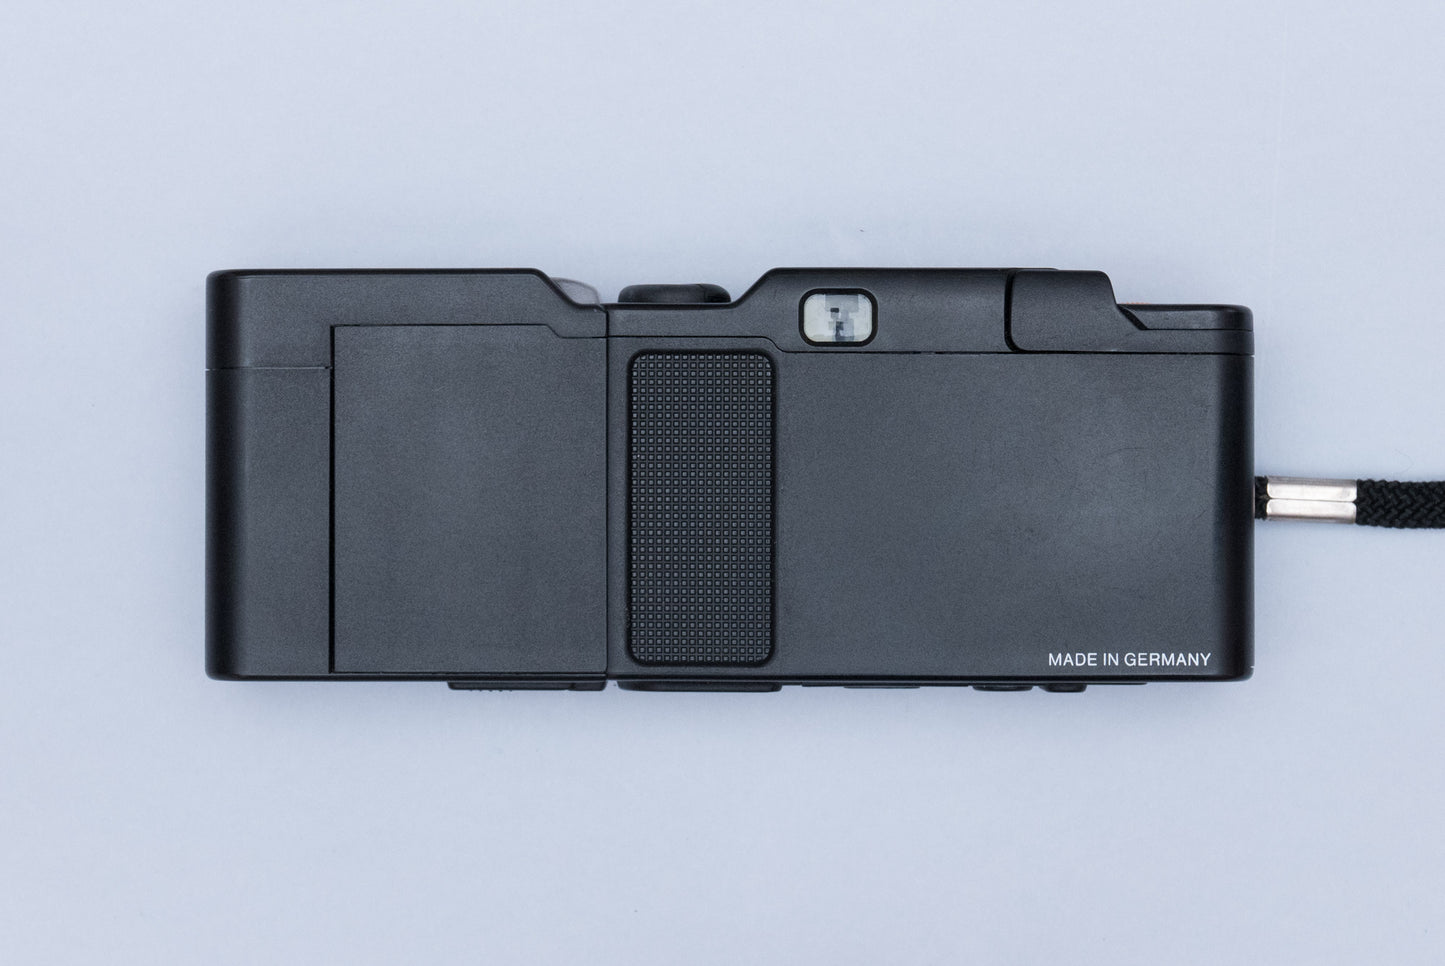 Revue 35 XE 35mm Compact Film Camera